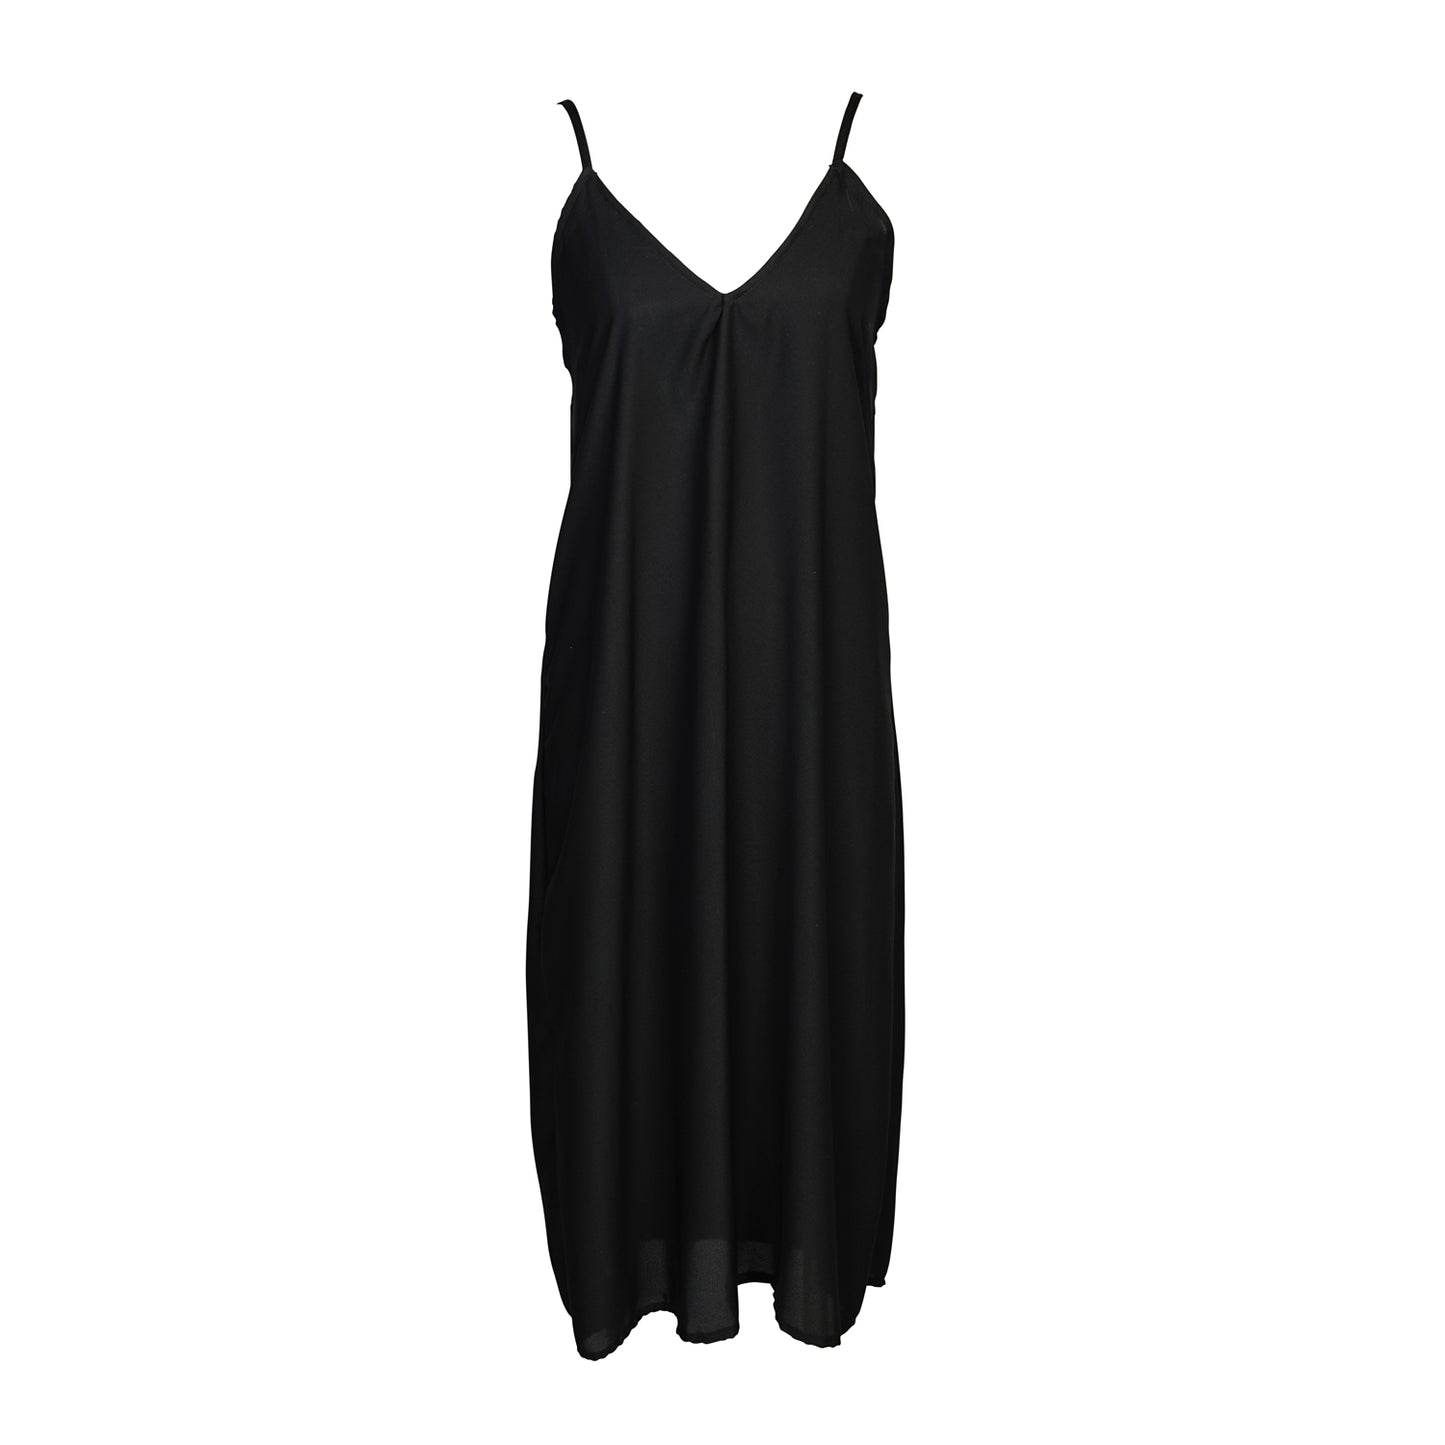 Black sequin layered slip dress featuring spaghetti strap and midi hemline.